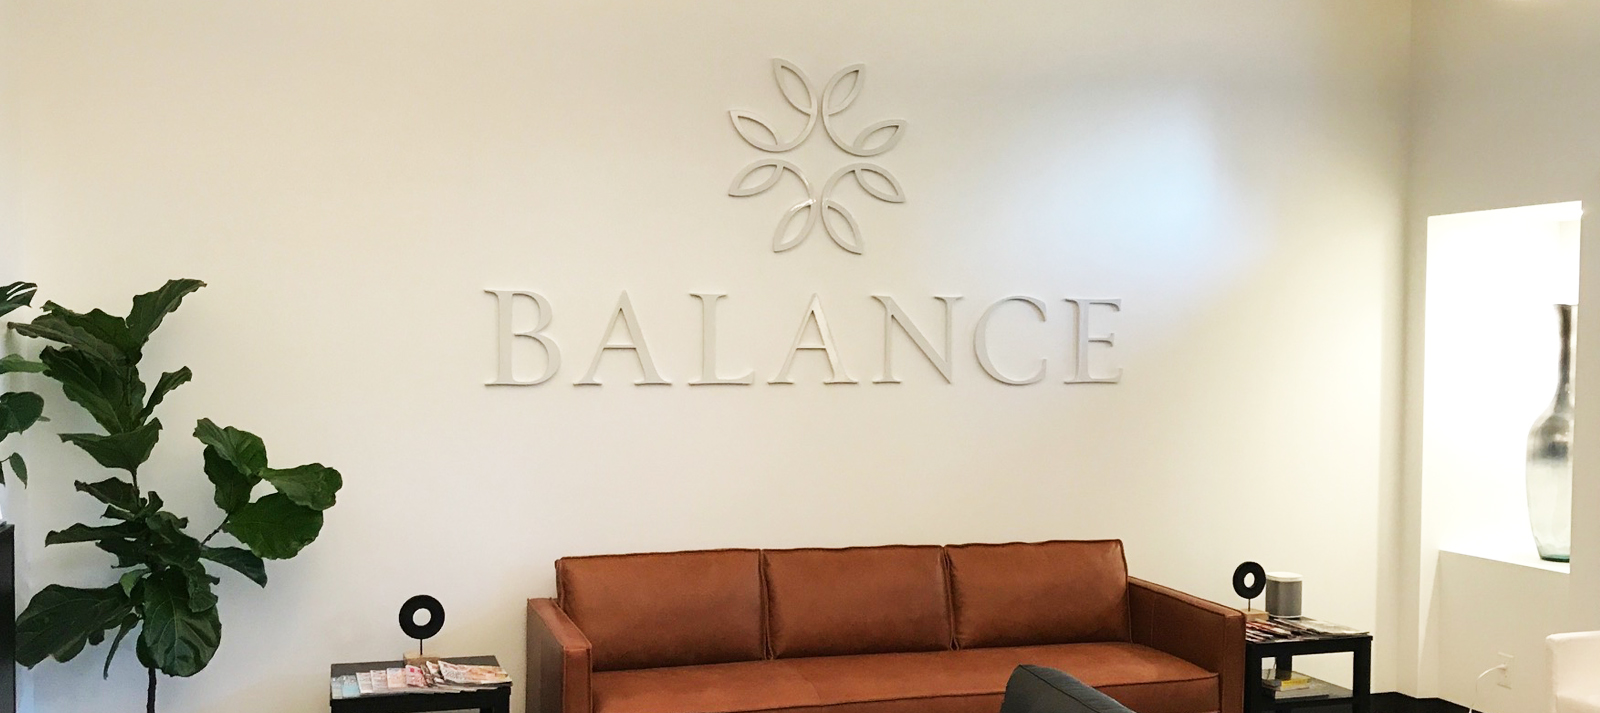 Balance - Office